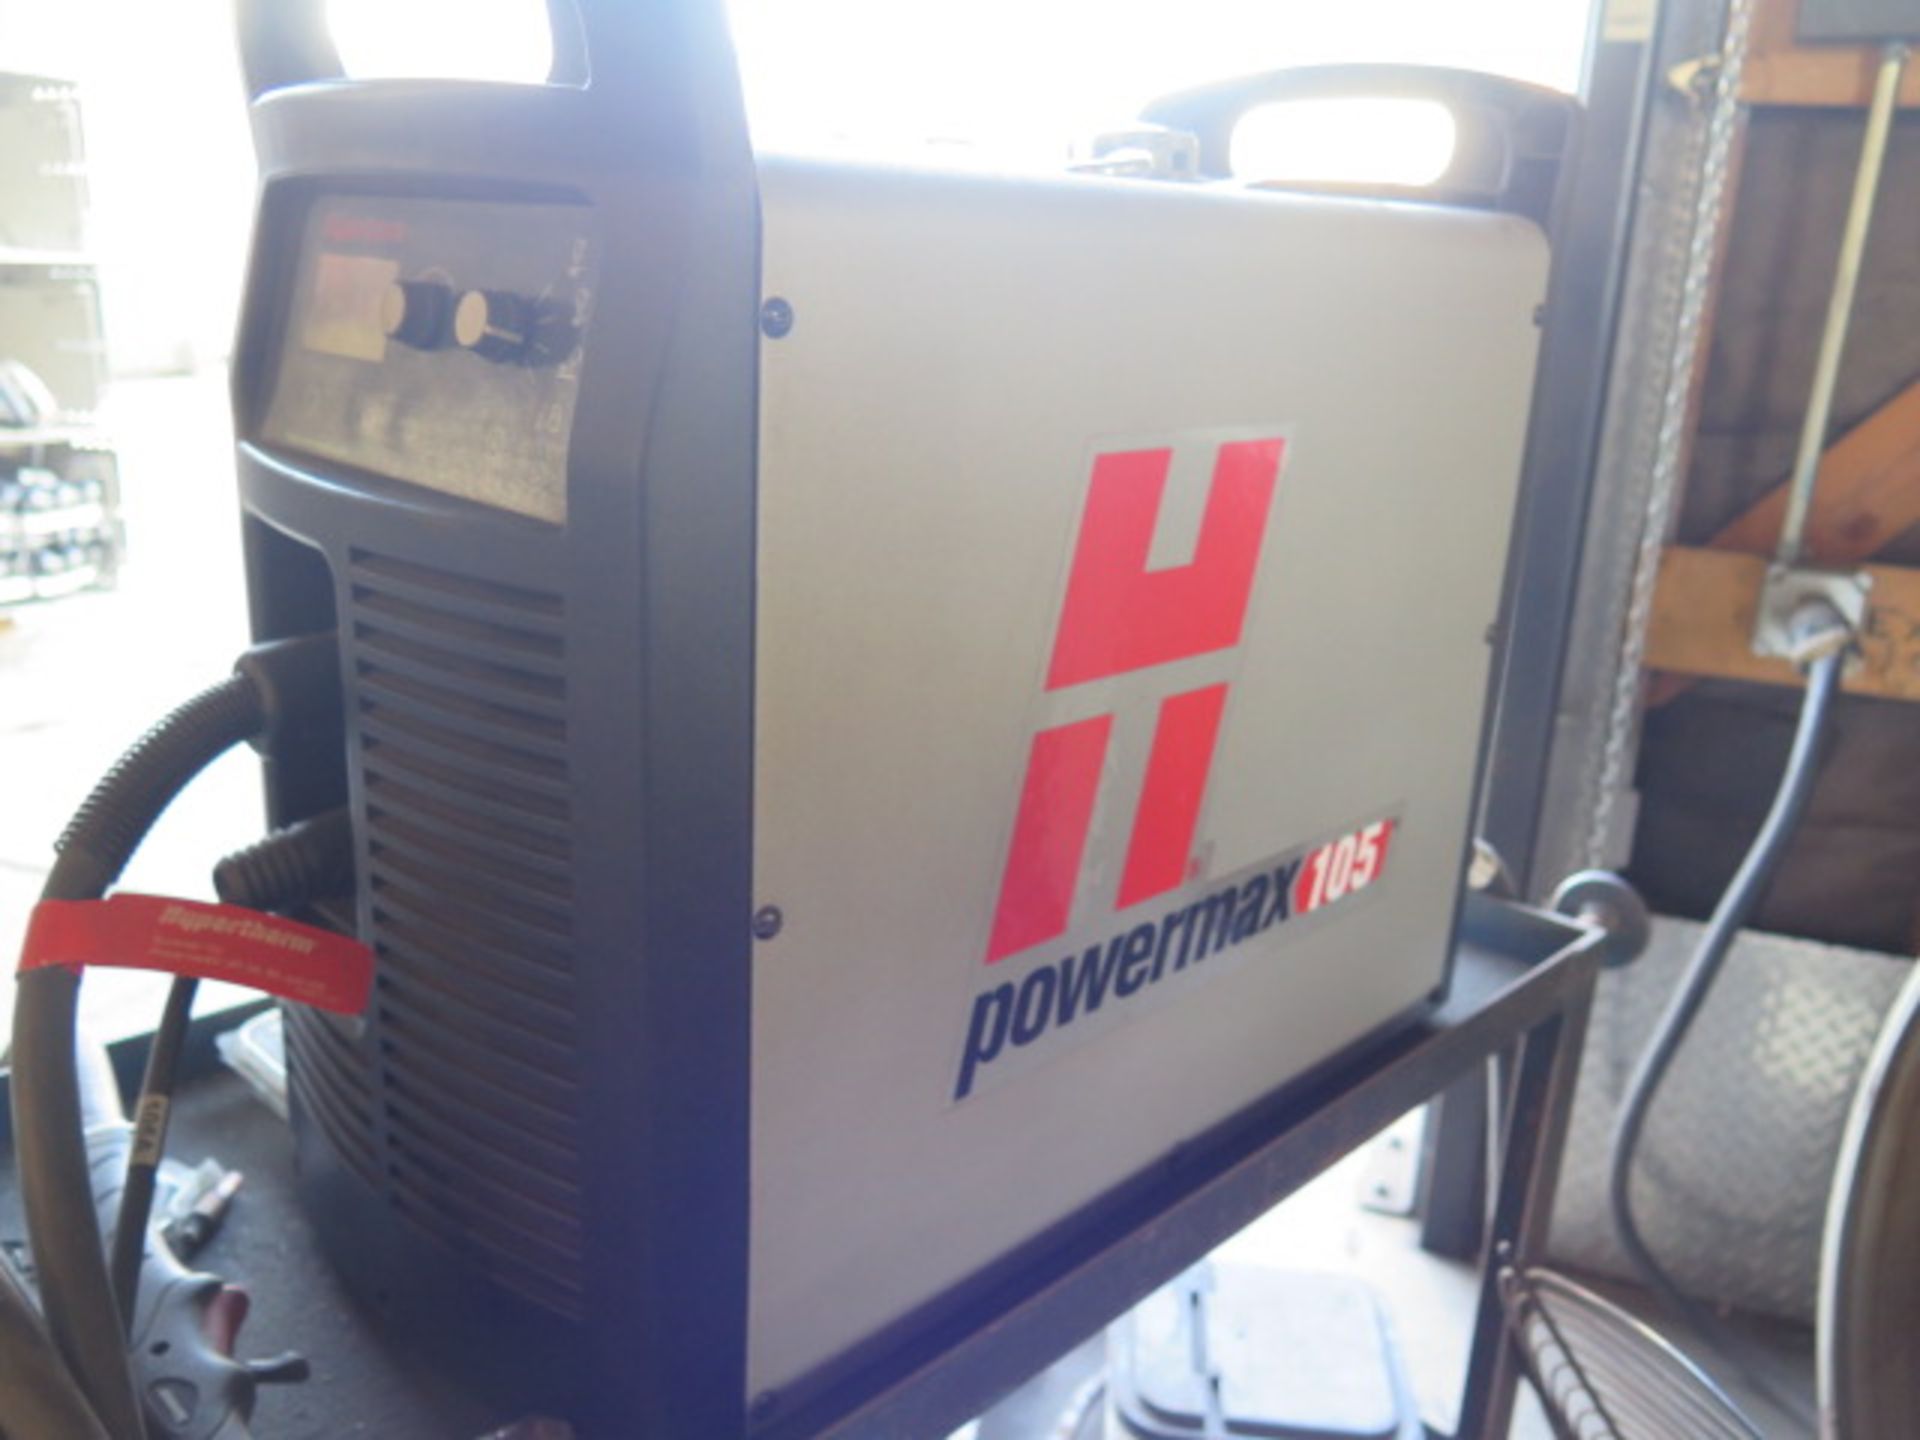 Hypertherm Powermax 105 Plasma Cutting Power Source s/n 105-027361 (SOLD AS-IS - NO WARRANTY) - Bild 3 aus 7